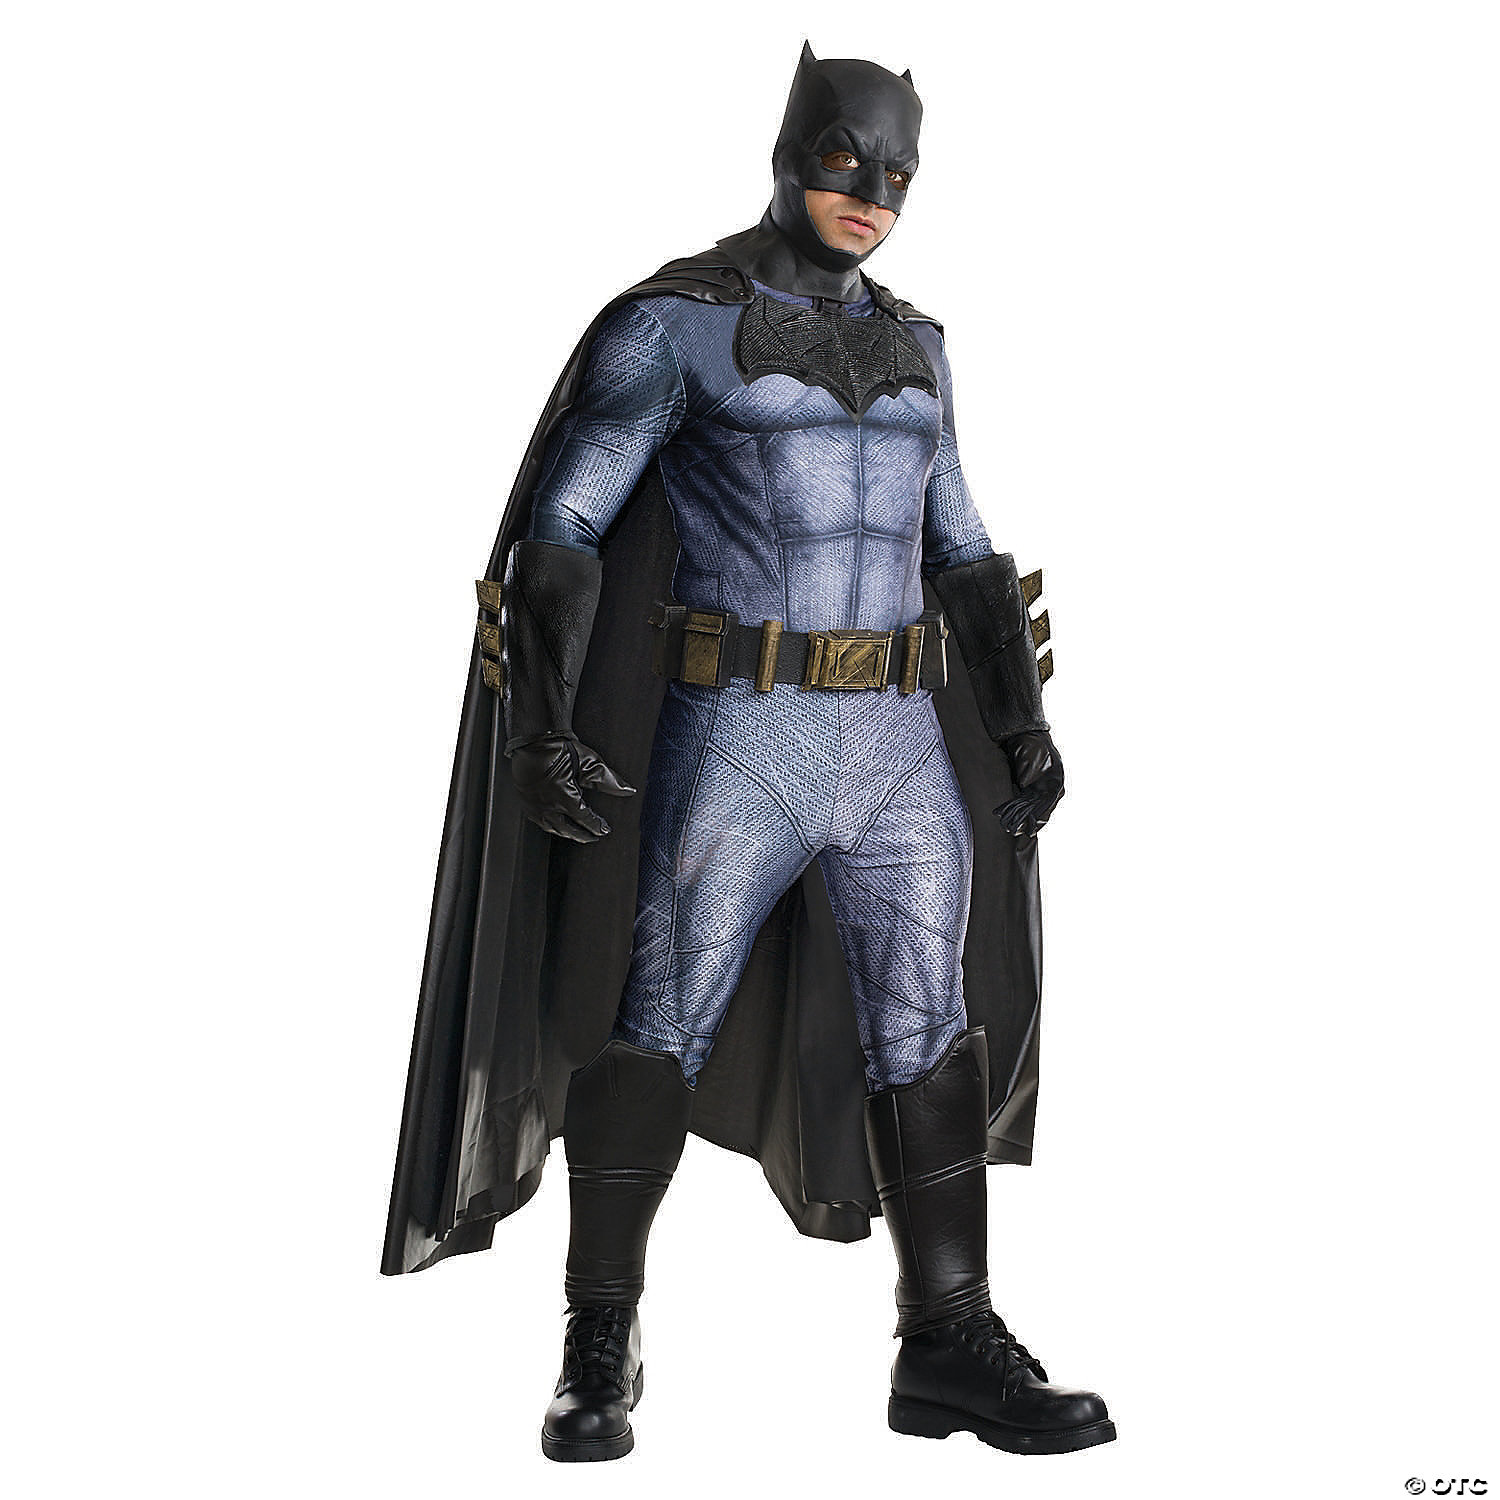 Superman's Batman v Superman: Dawn of Justice Costume